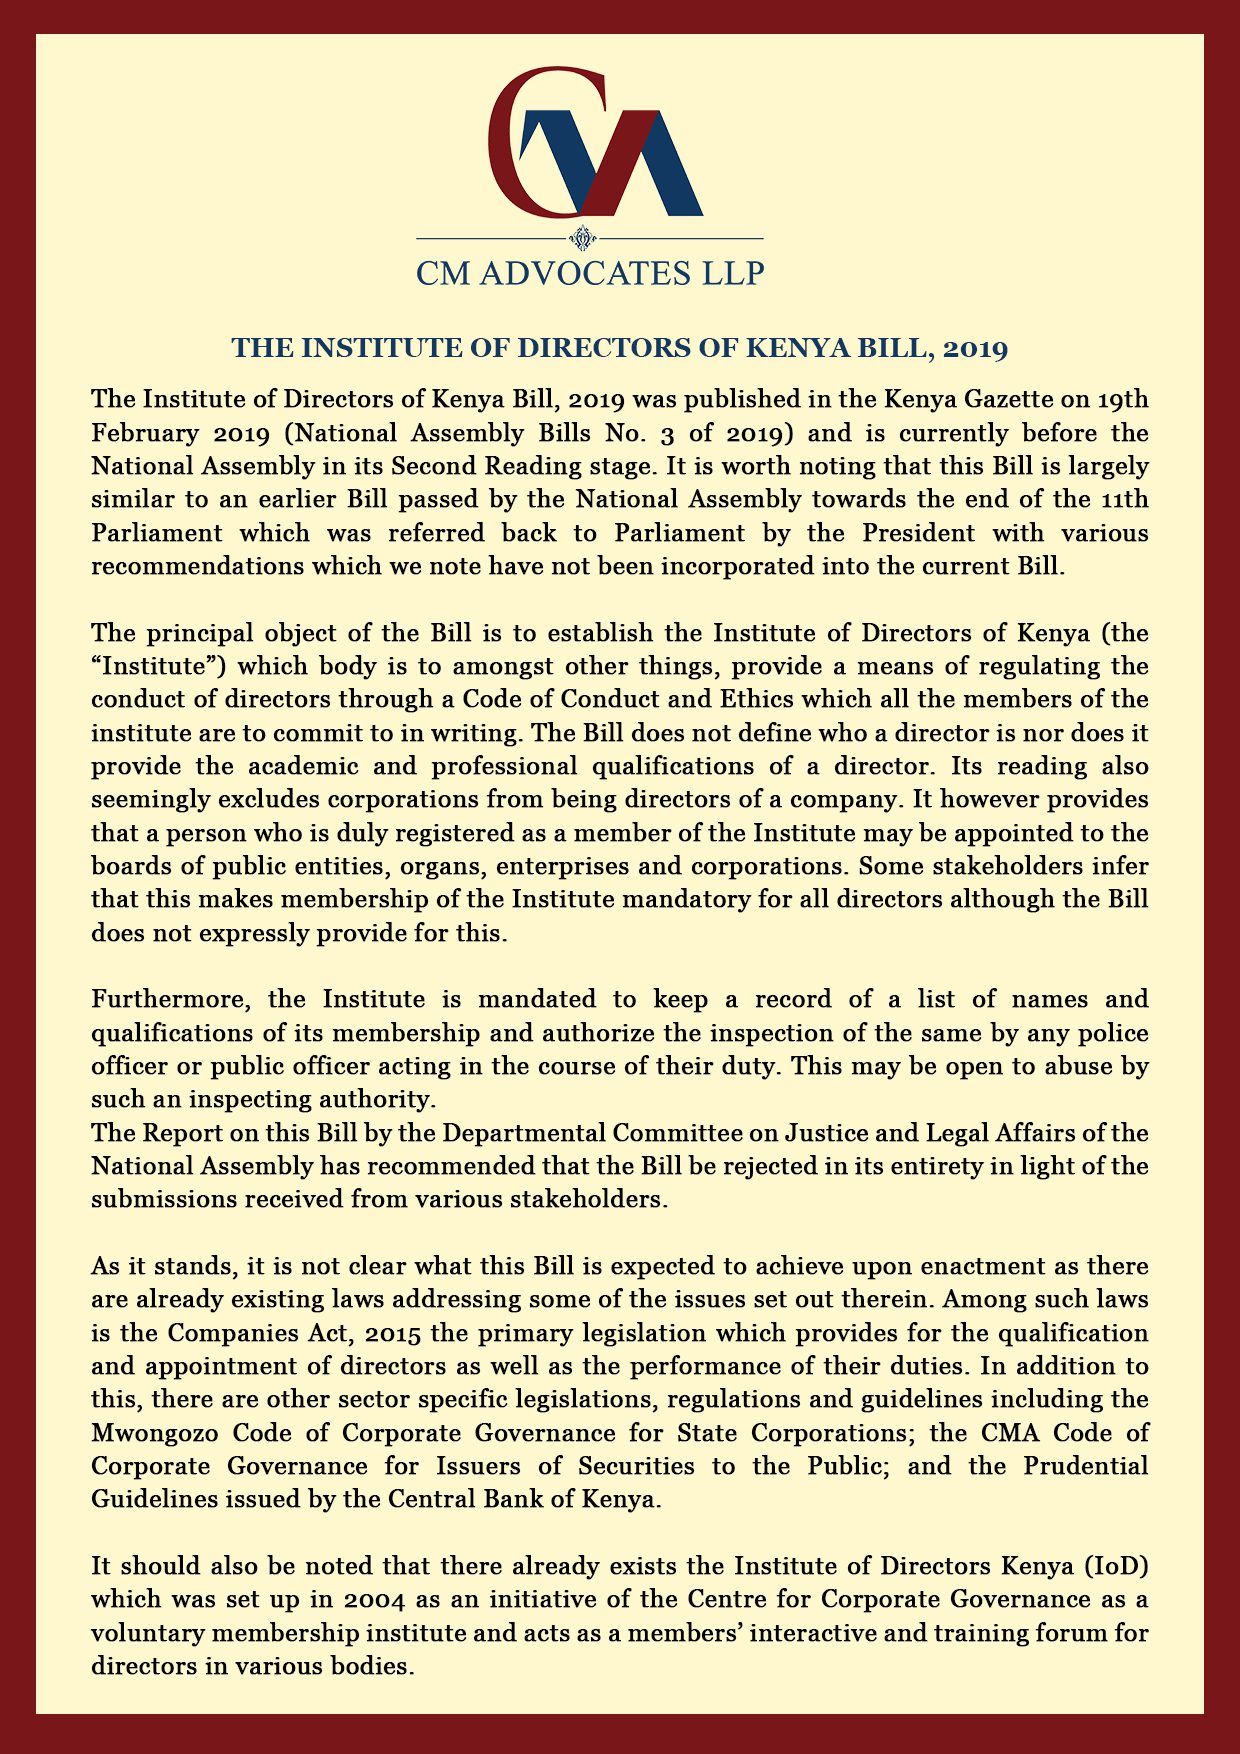 Update on the Institute of Directors of Kenyan Bill